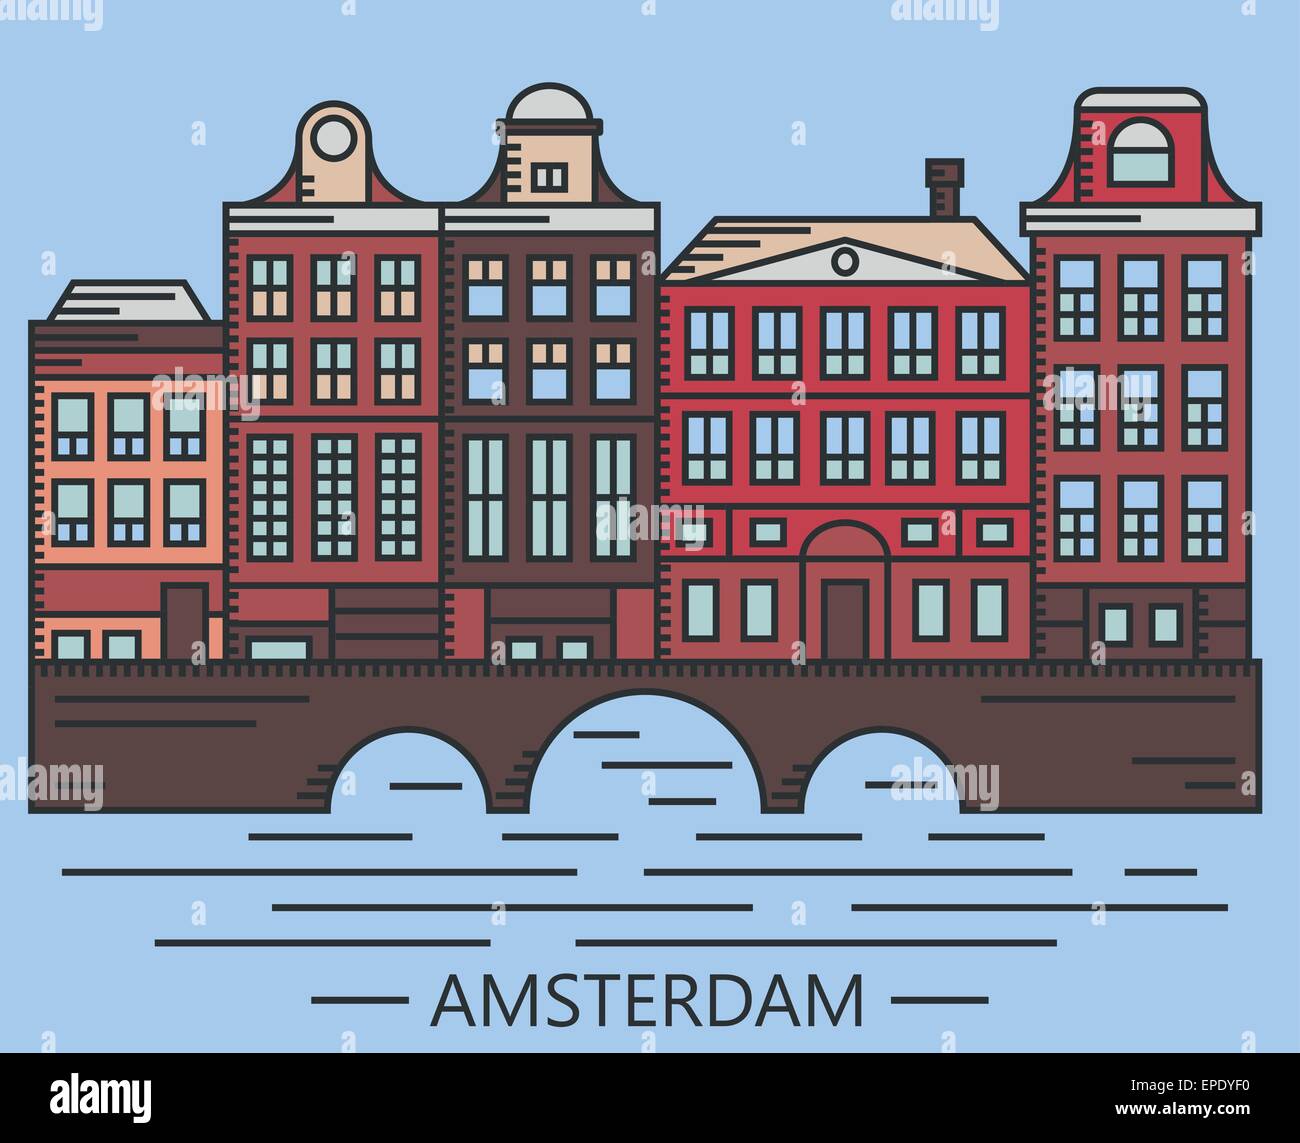 Old Amsterdam Holland Häuser auf Brücke Set Vektorgrafik gezogene Linie Stock Vektor